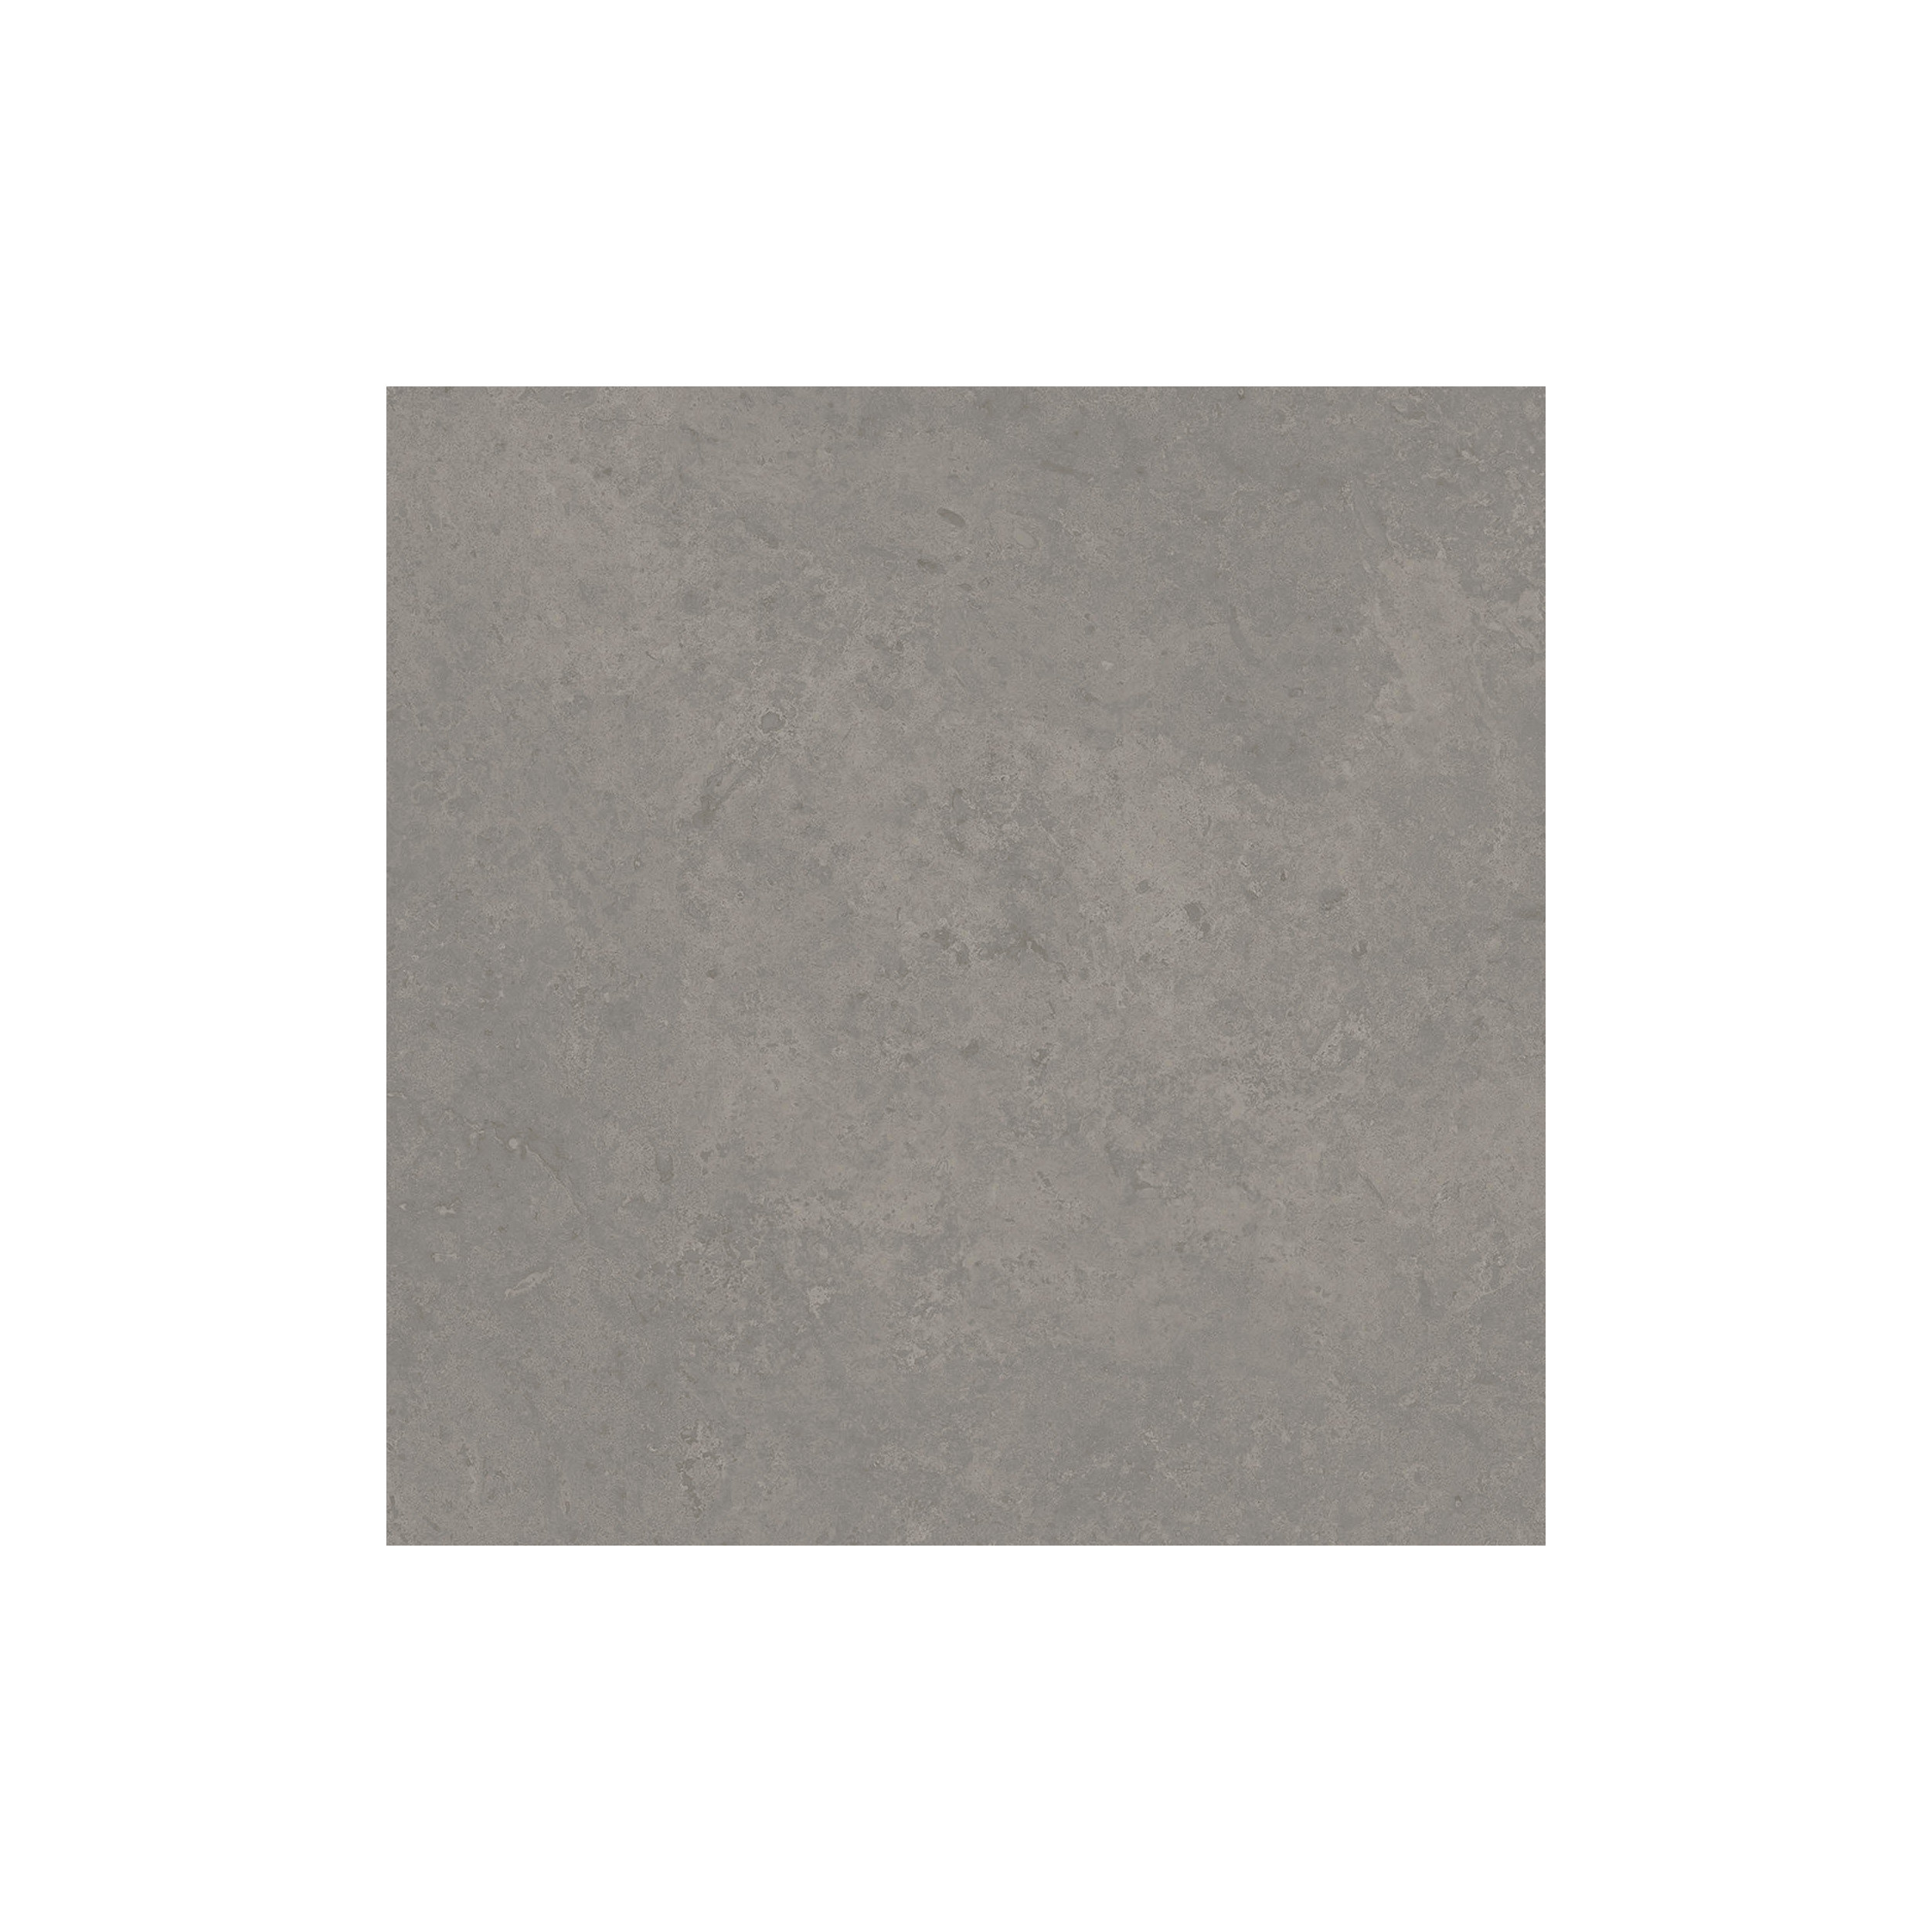 Textured Stones LVT In Medium Concrete afbeeldingnummer 8